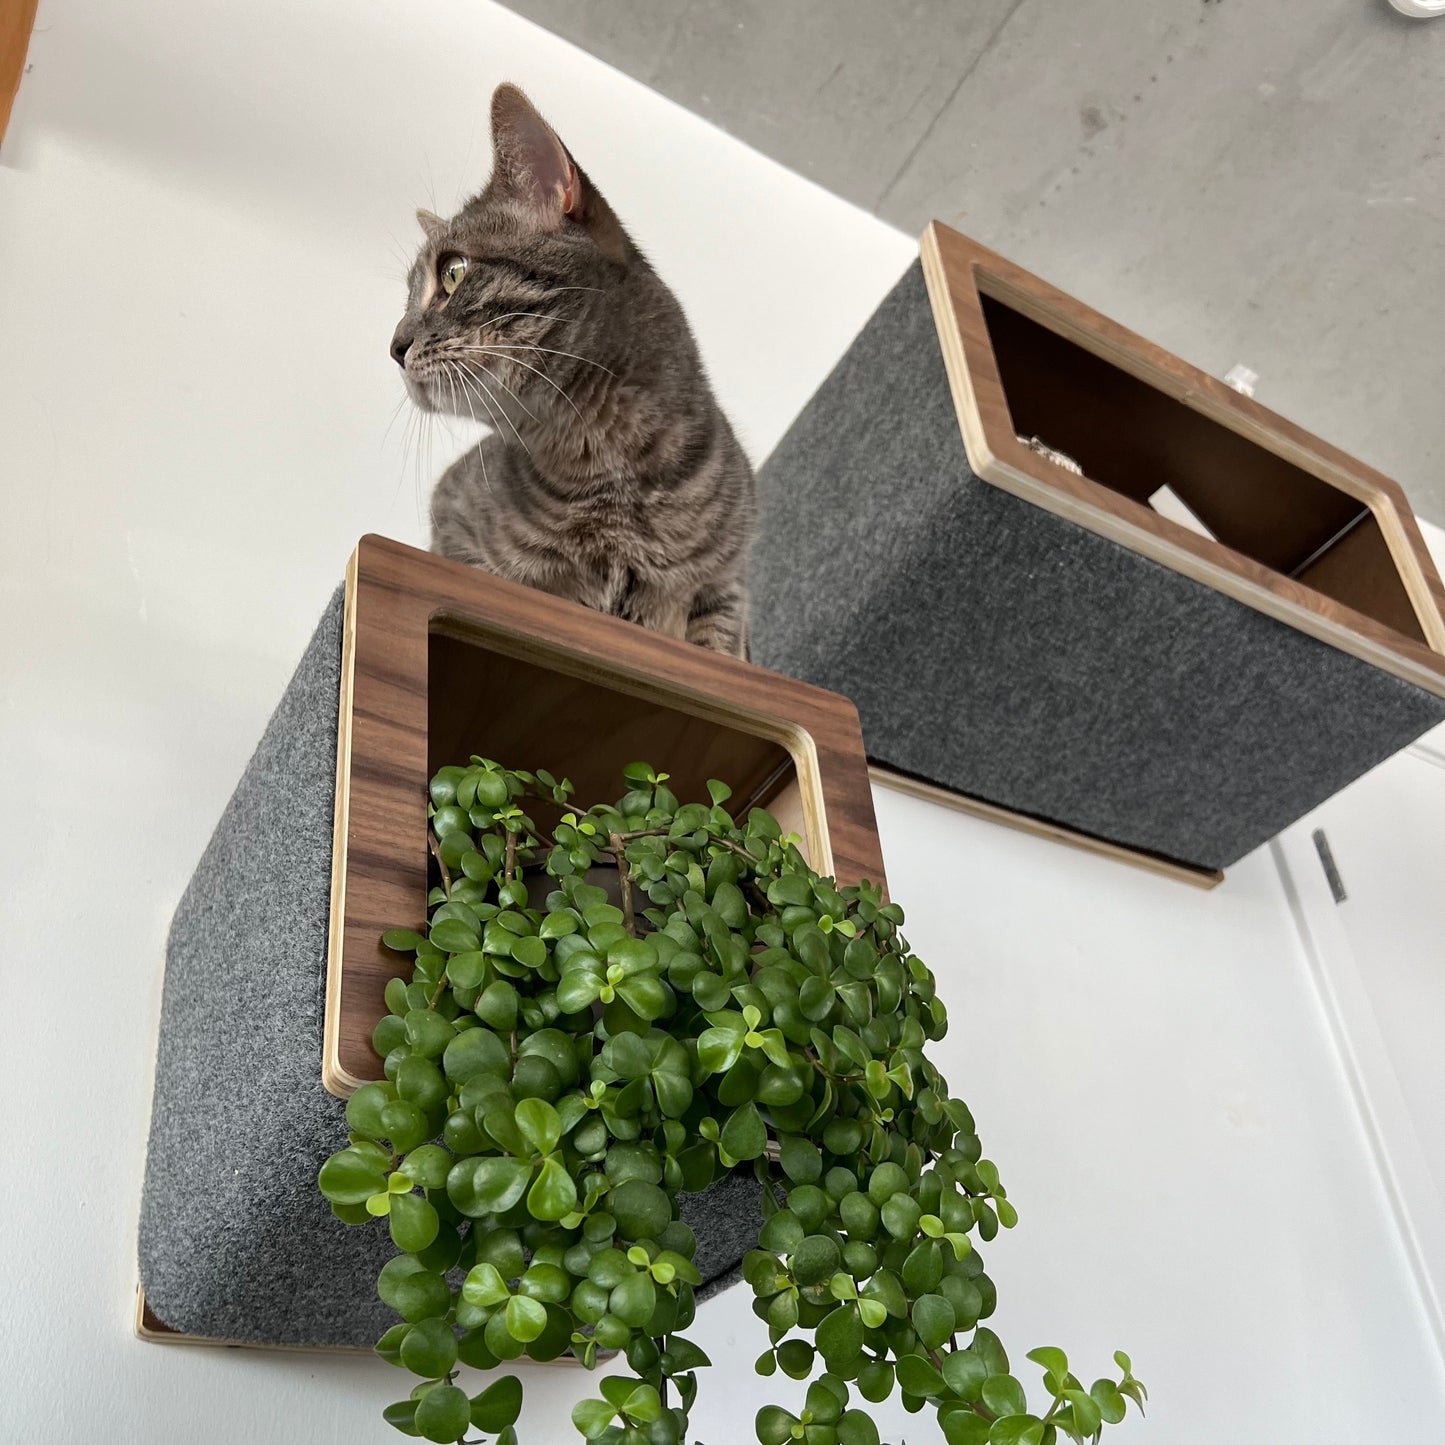 Large Box Kitty Landing Shelf - Cat Wall terrain  - Floating Box shelf and Cat Landing